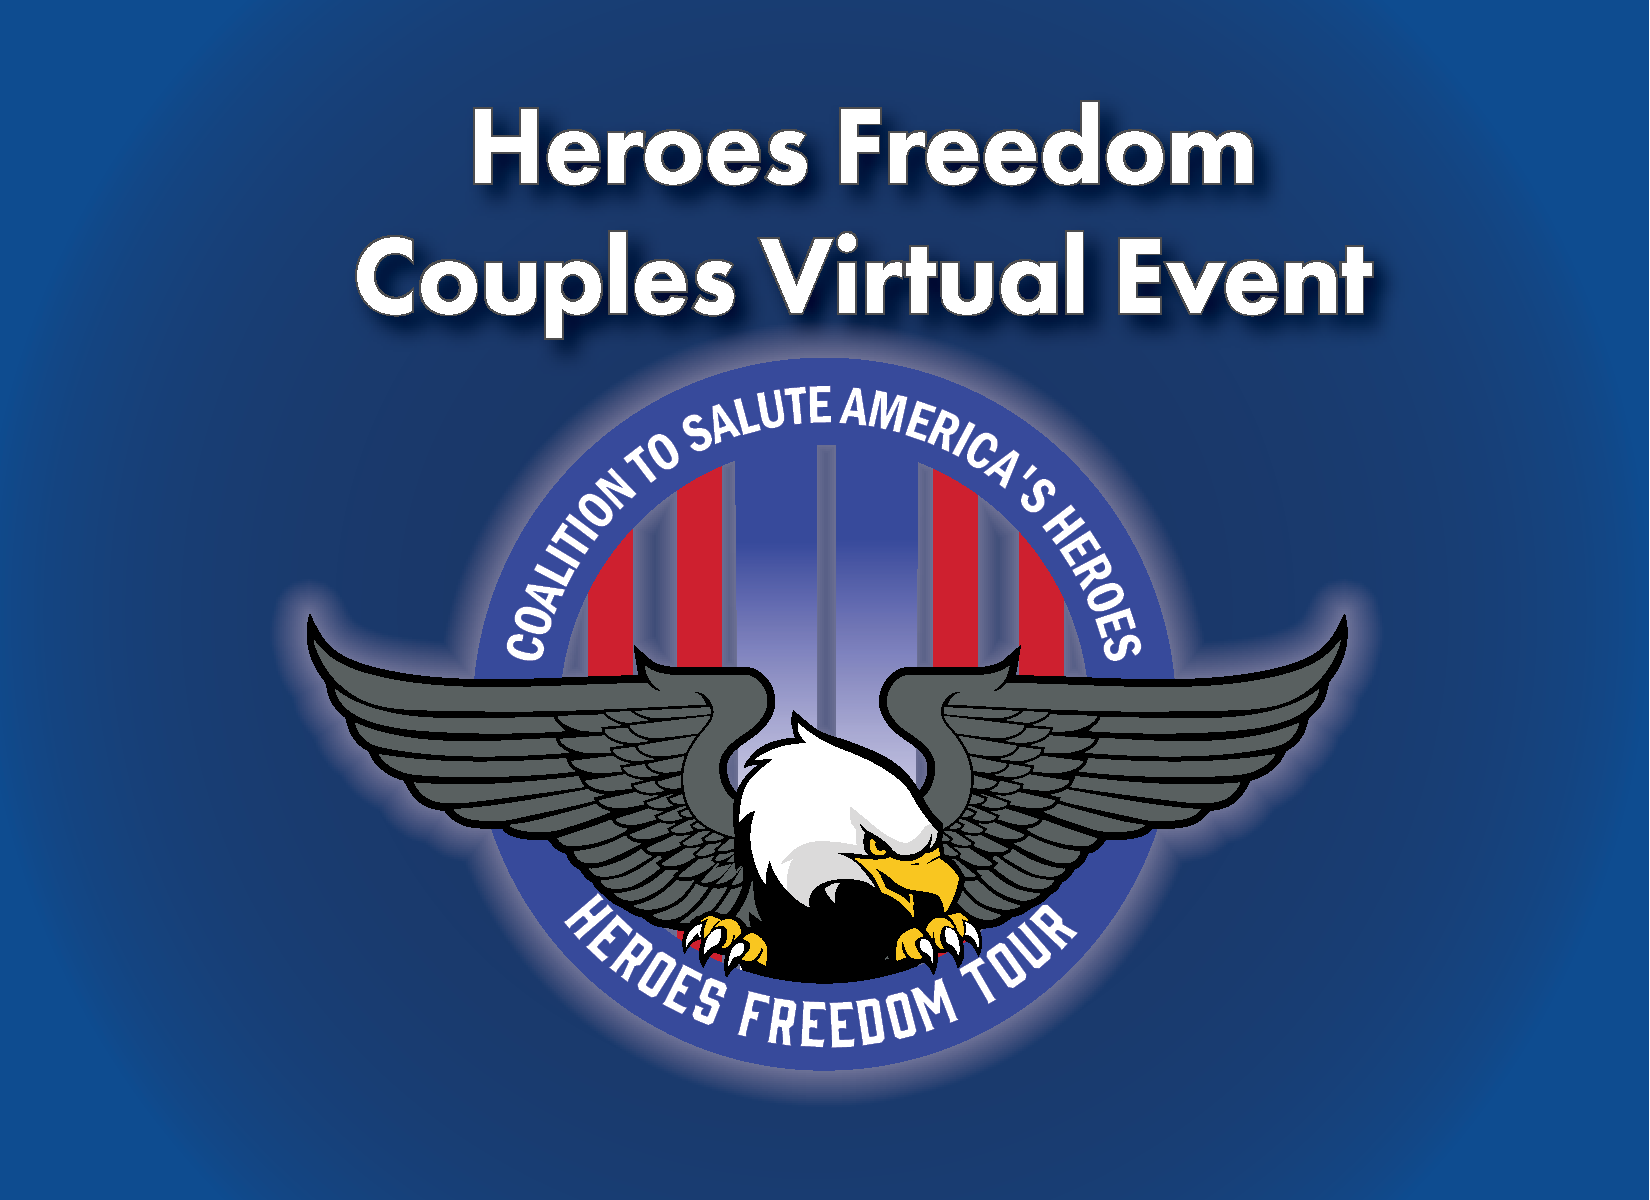 Heroes Freedom Weekend Coalition to Salute America’s Heroes